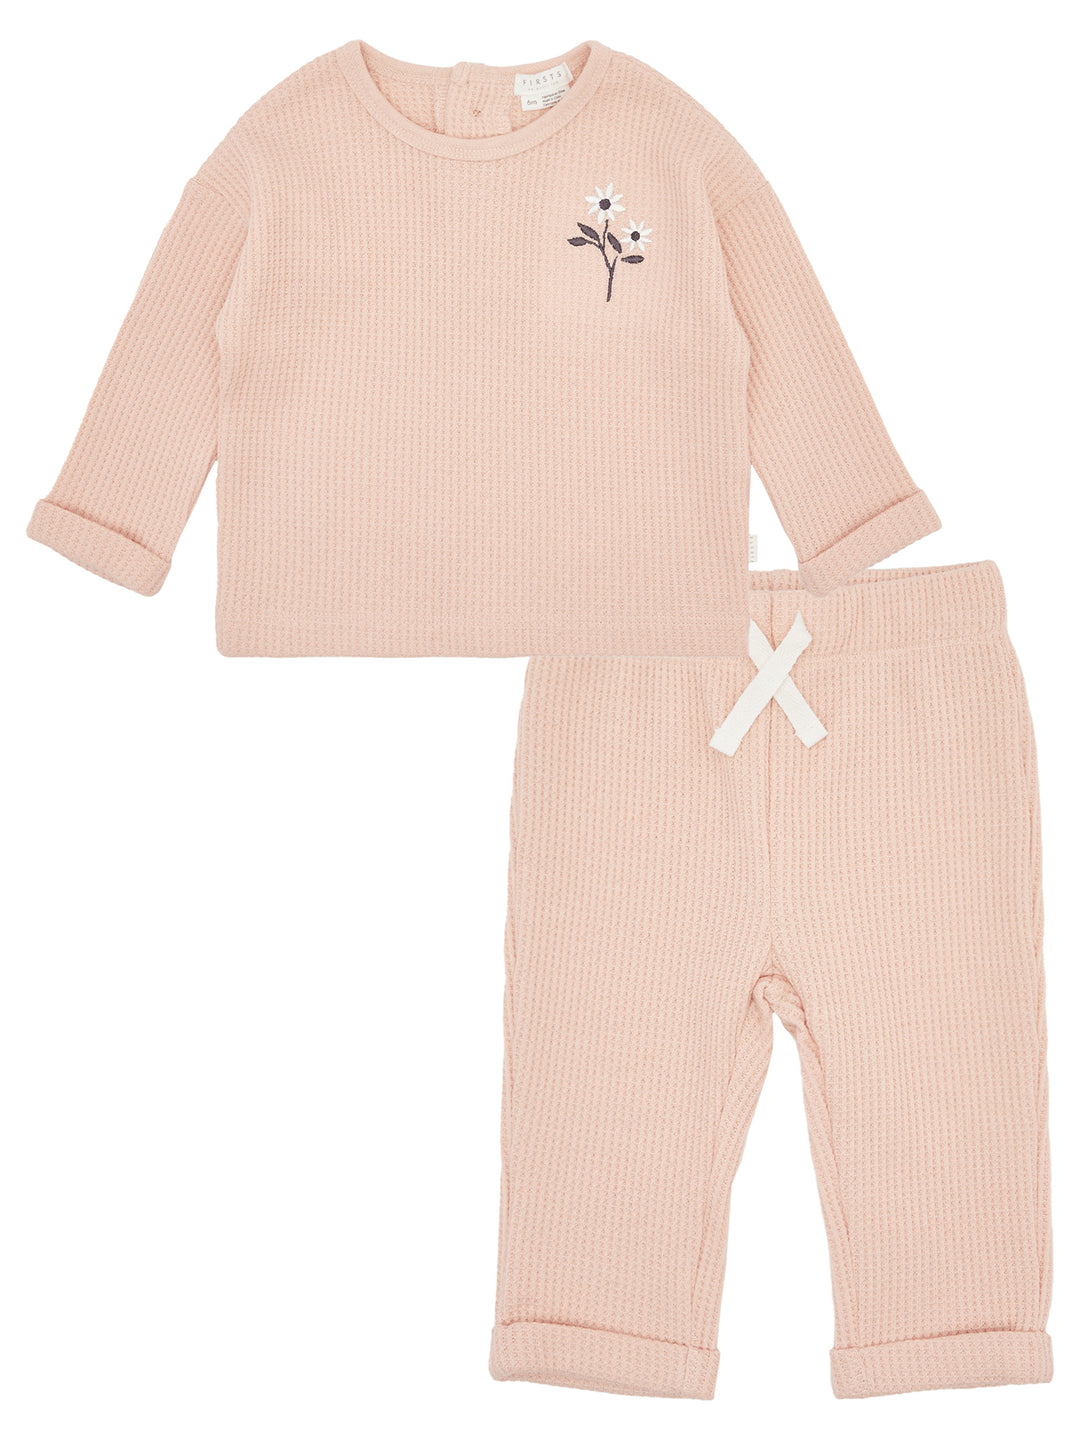 2 Pc Pink Set: L/s Top + Knit Pant